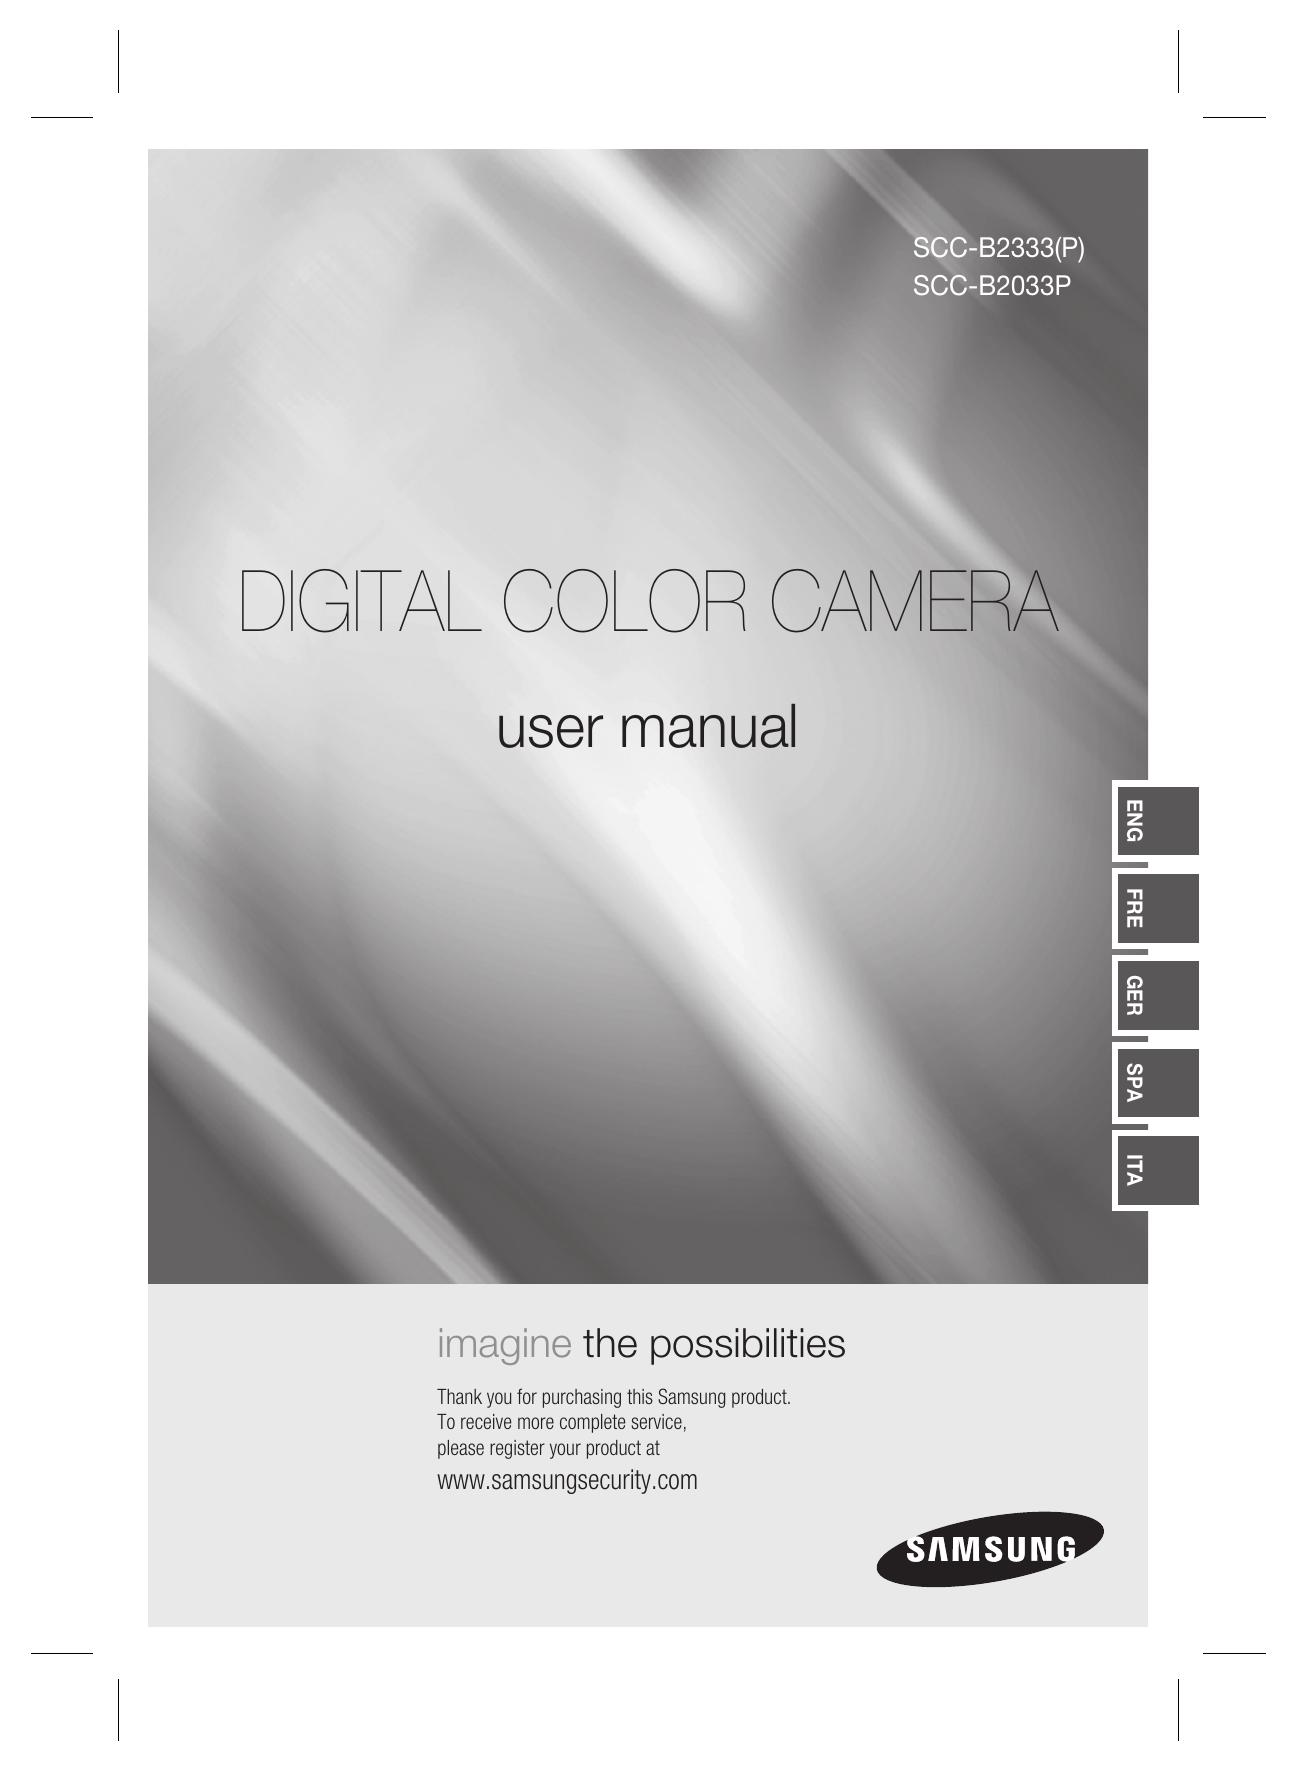 Samsung SCC-B2333(P) Security Camera User Manual